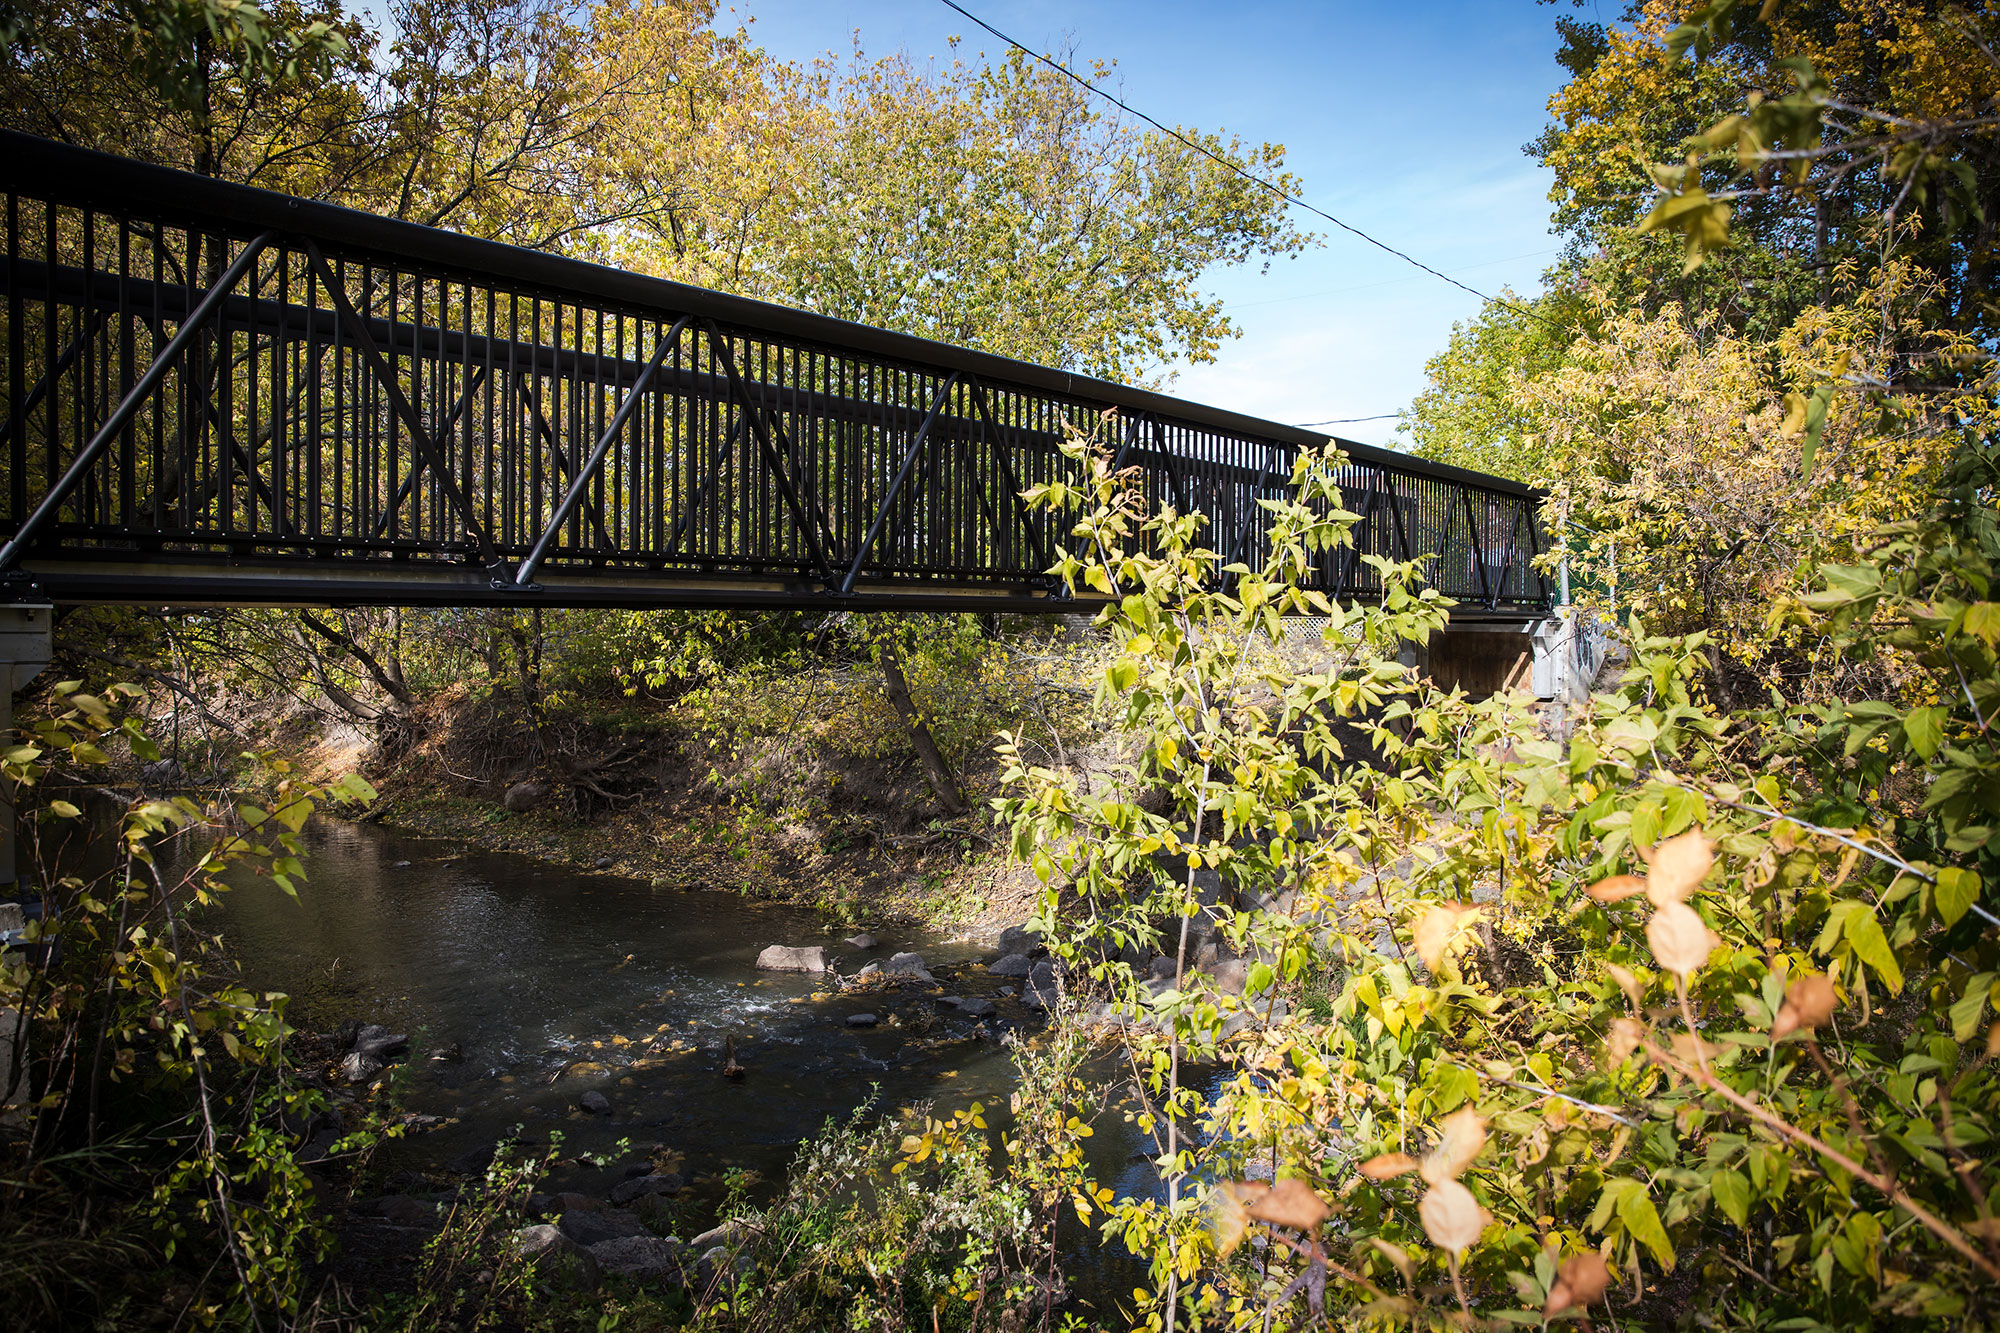 Weld-free pedestrian bridge with black finish over river in Canada